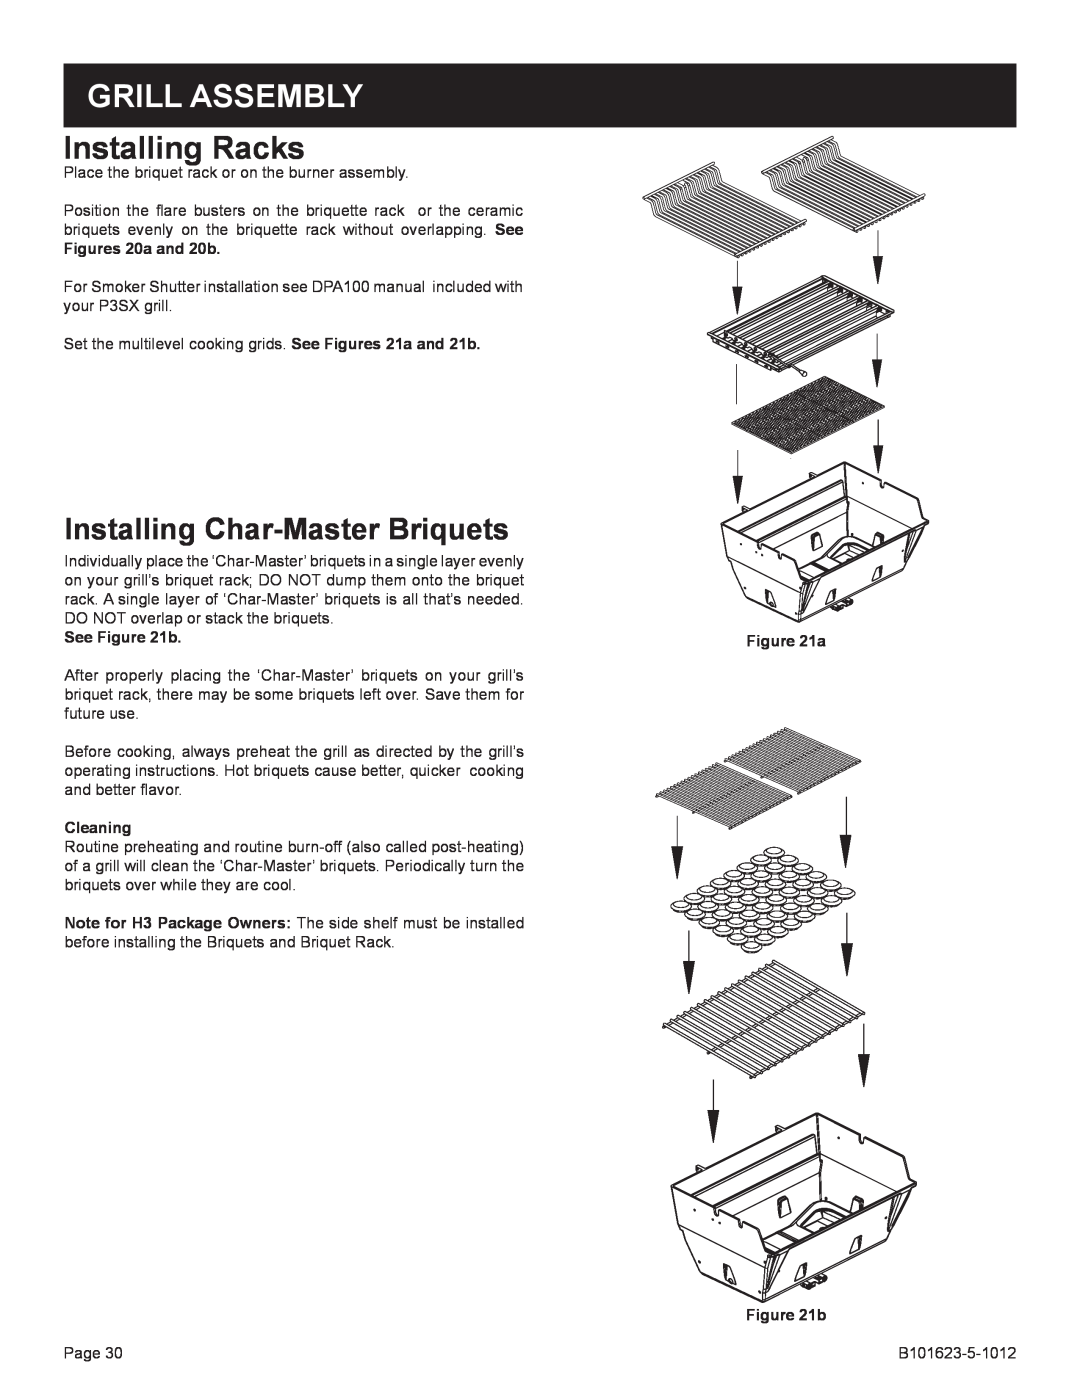 Broilmaster R3-1, P4XFN-1 manual Installing Racks, Installing Char-Master Briquets, Grill Assembly 